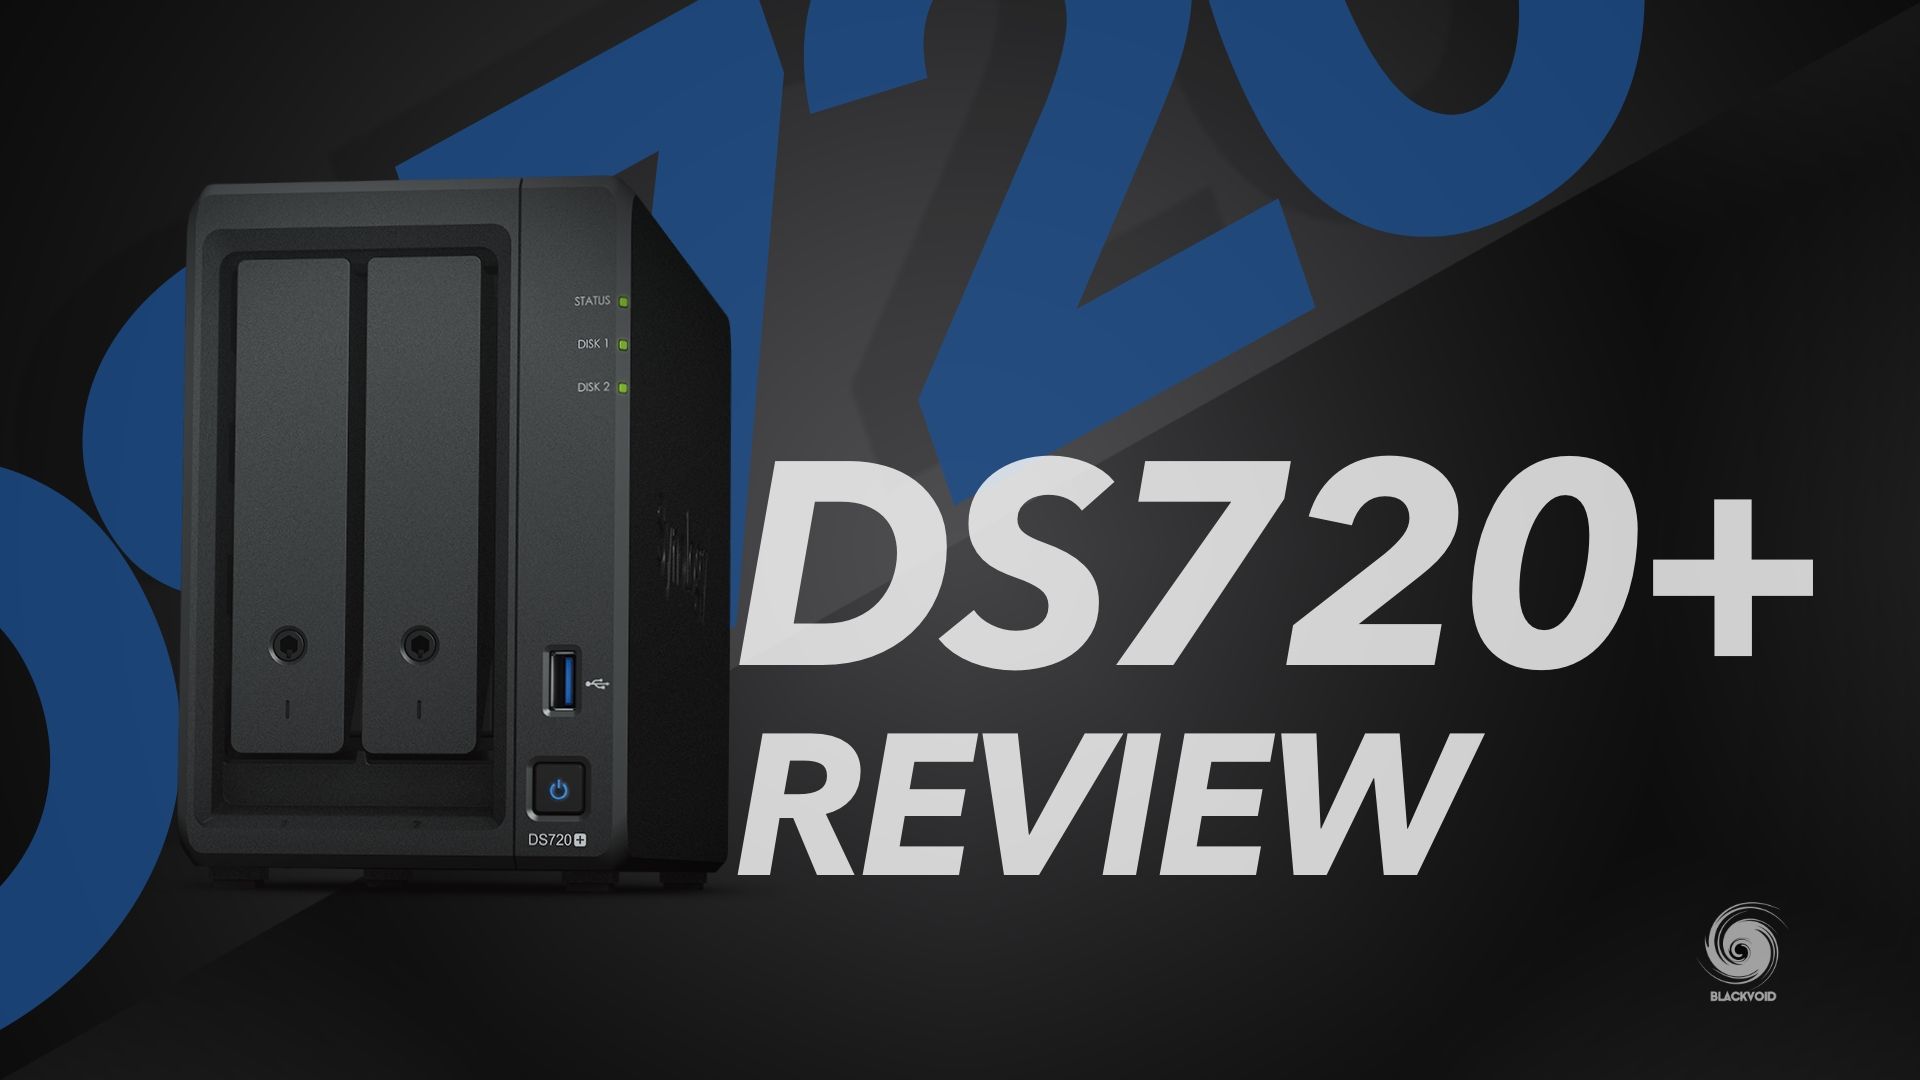 DS720+ running with DSM 7.1